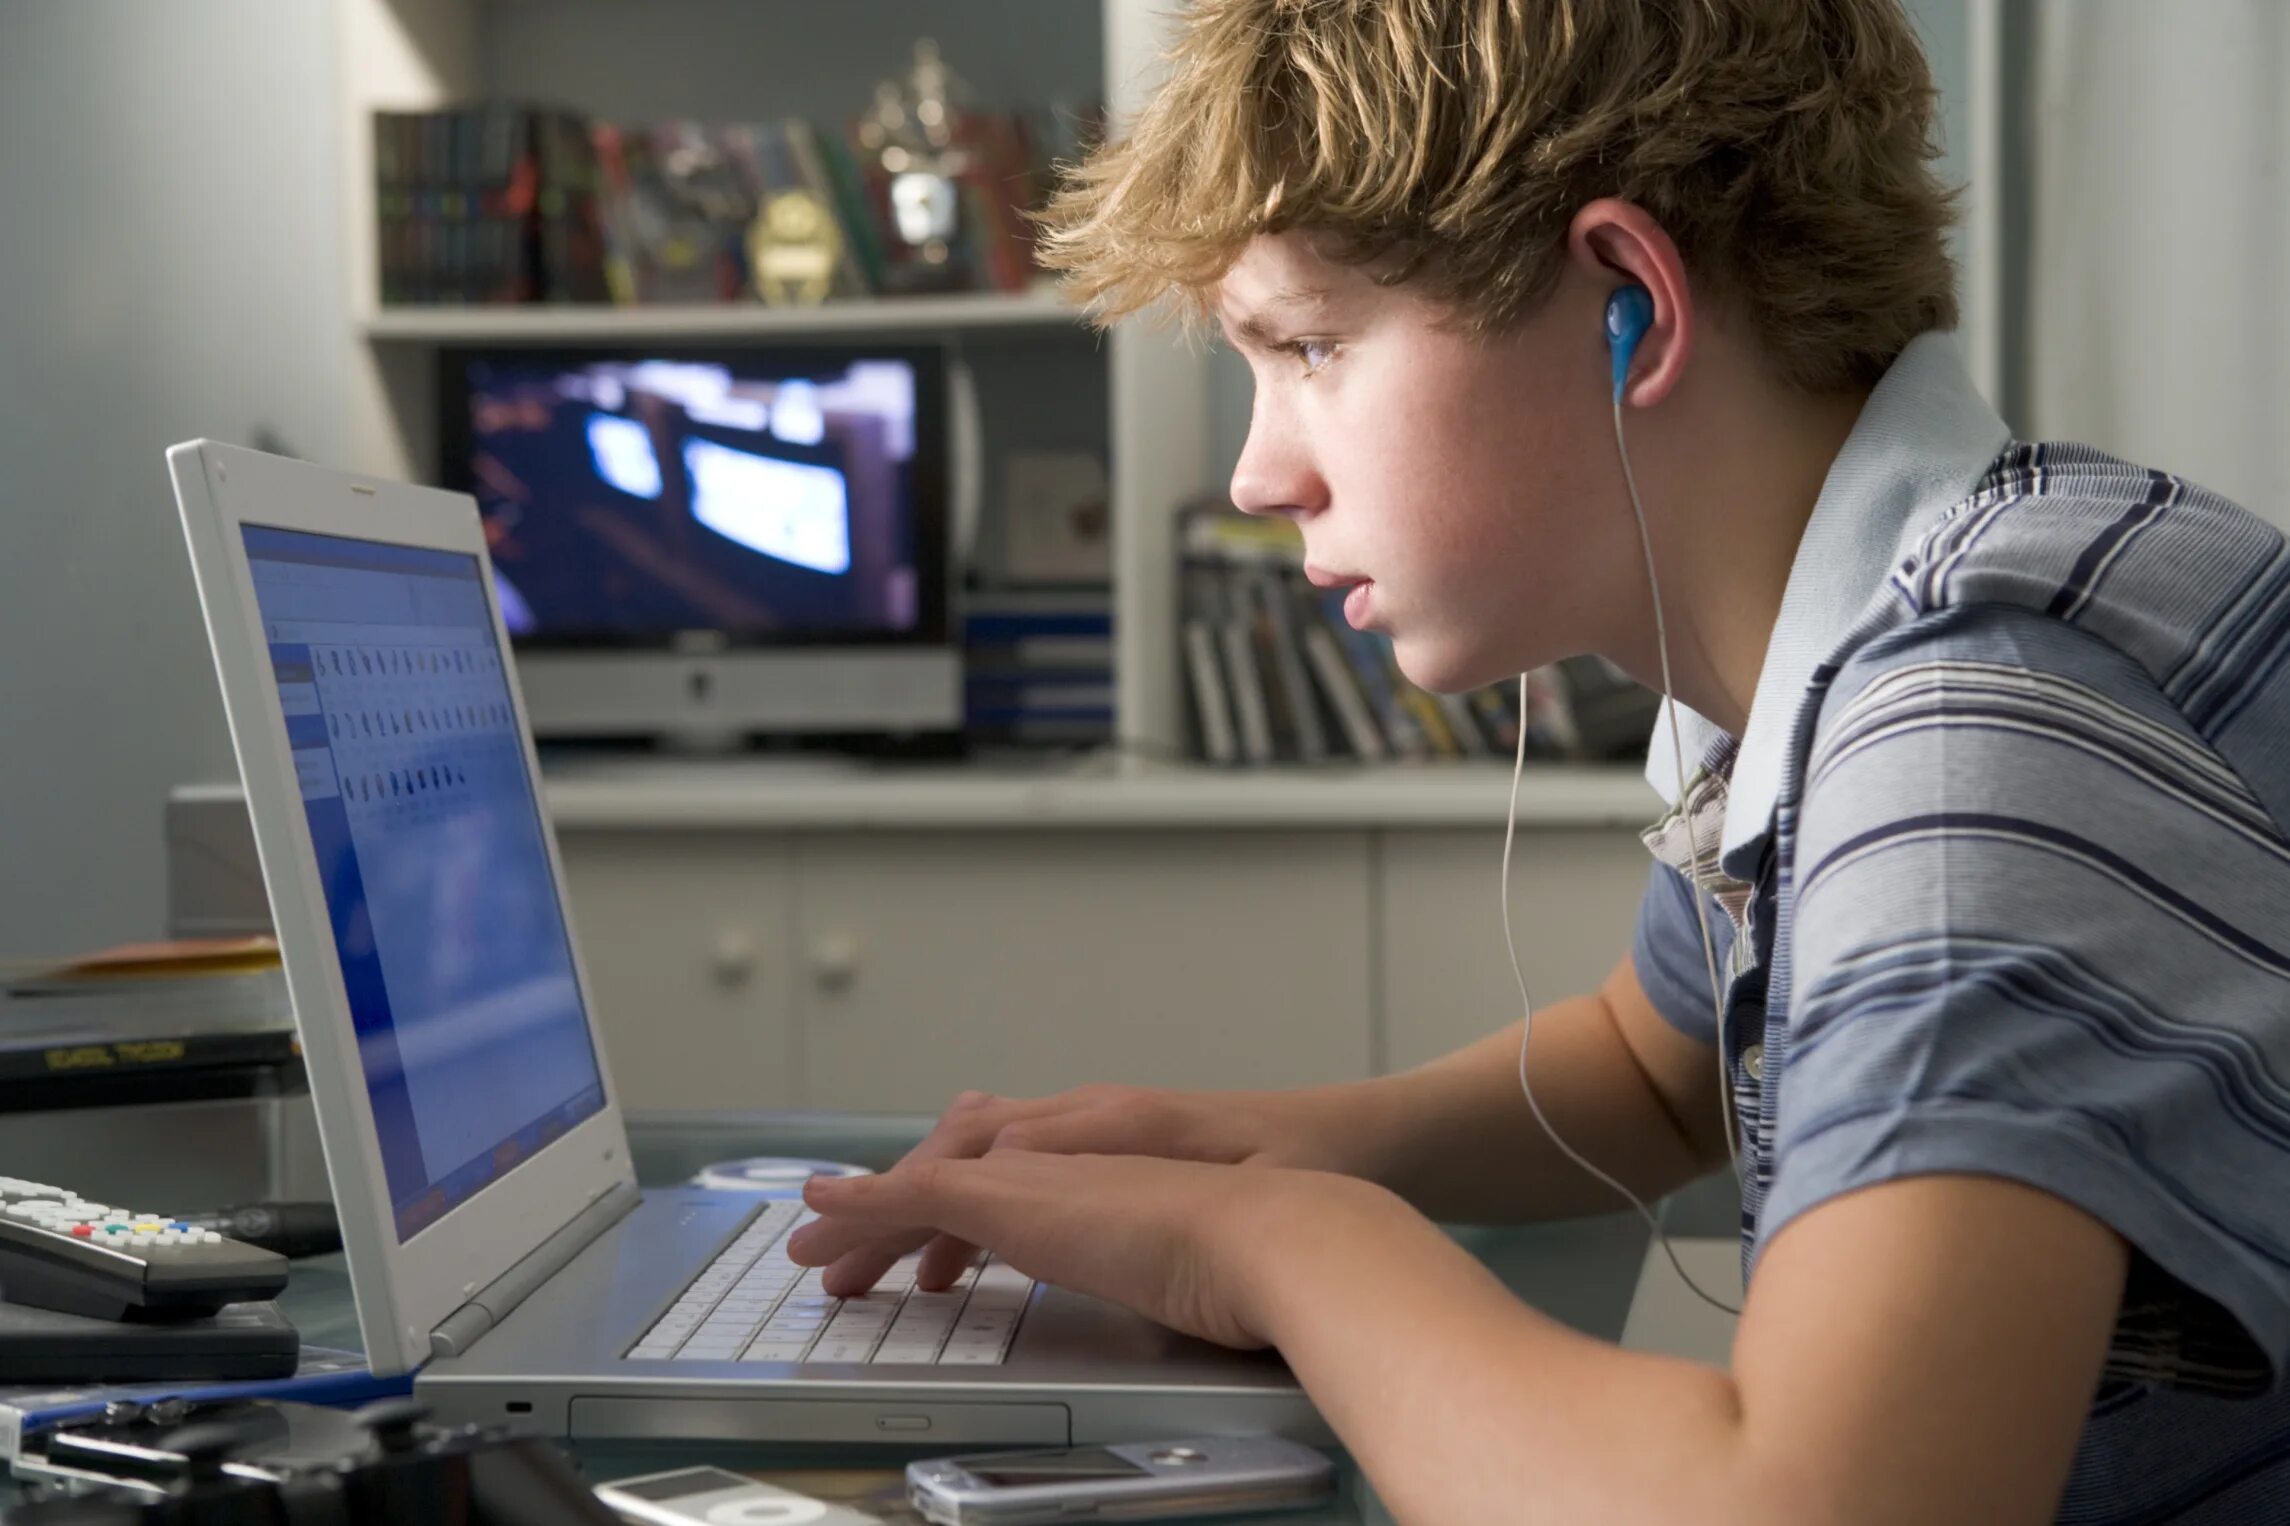 Подросток за компьютером. Подросток и компьютер. Подросток играющий в компьютер. Подросток и компьютерная зависимость.